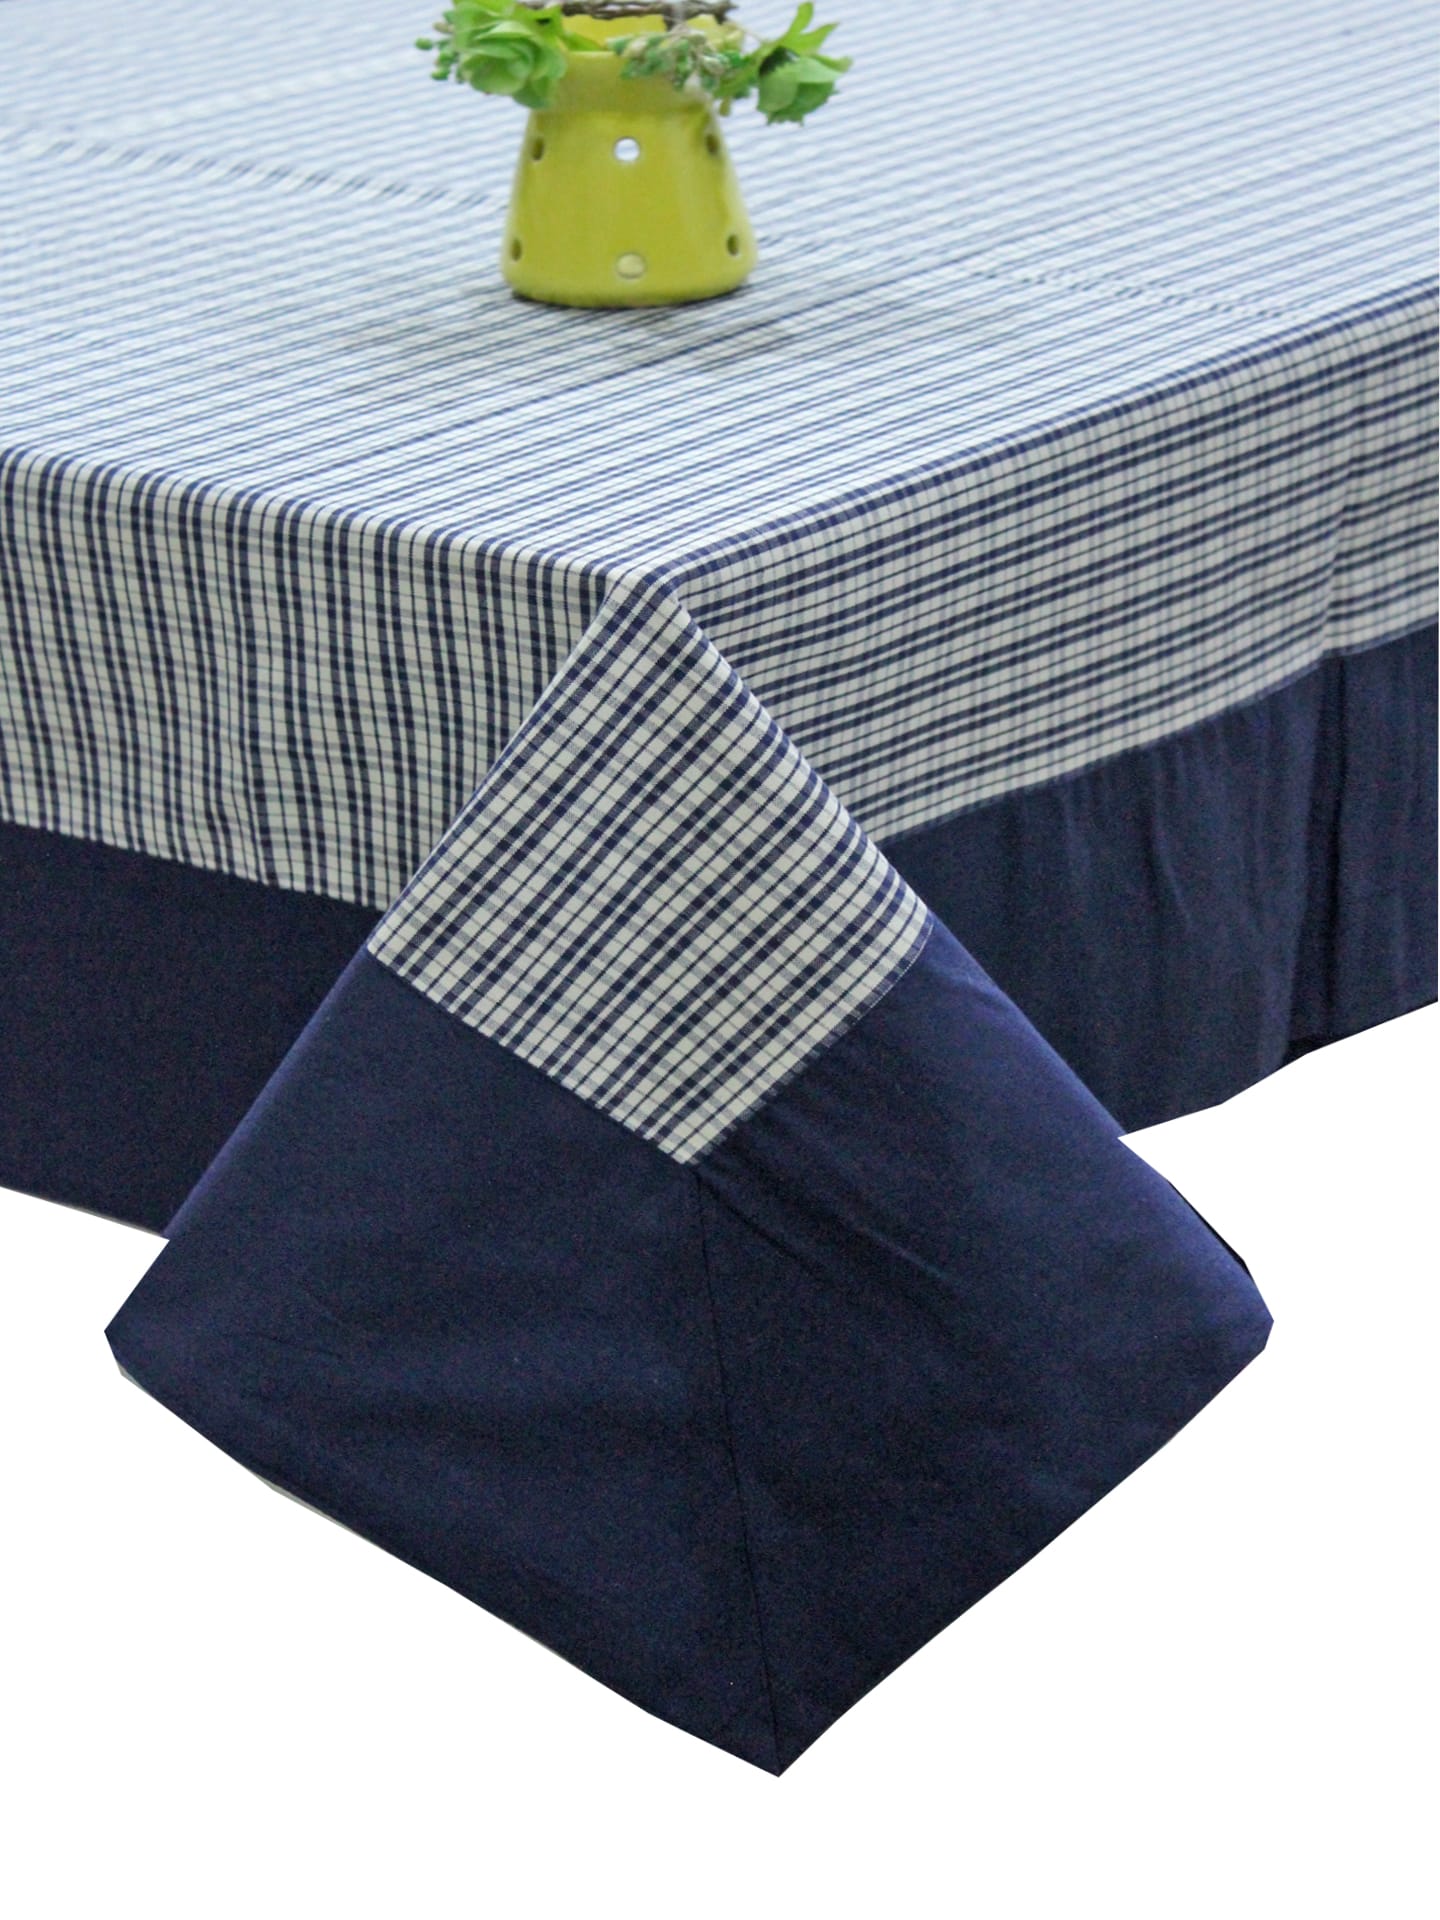 ALPHA Woven Cotton Check 1 Pc Table Cover - Blue